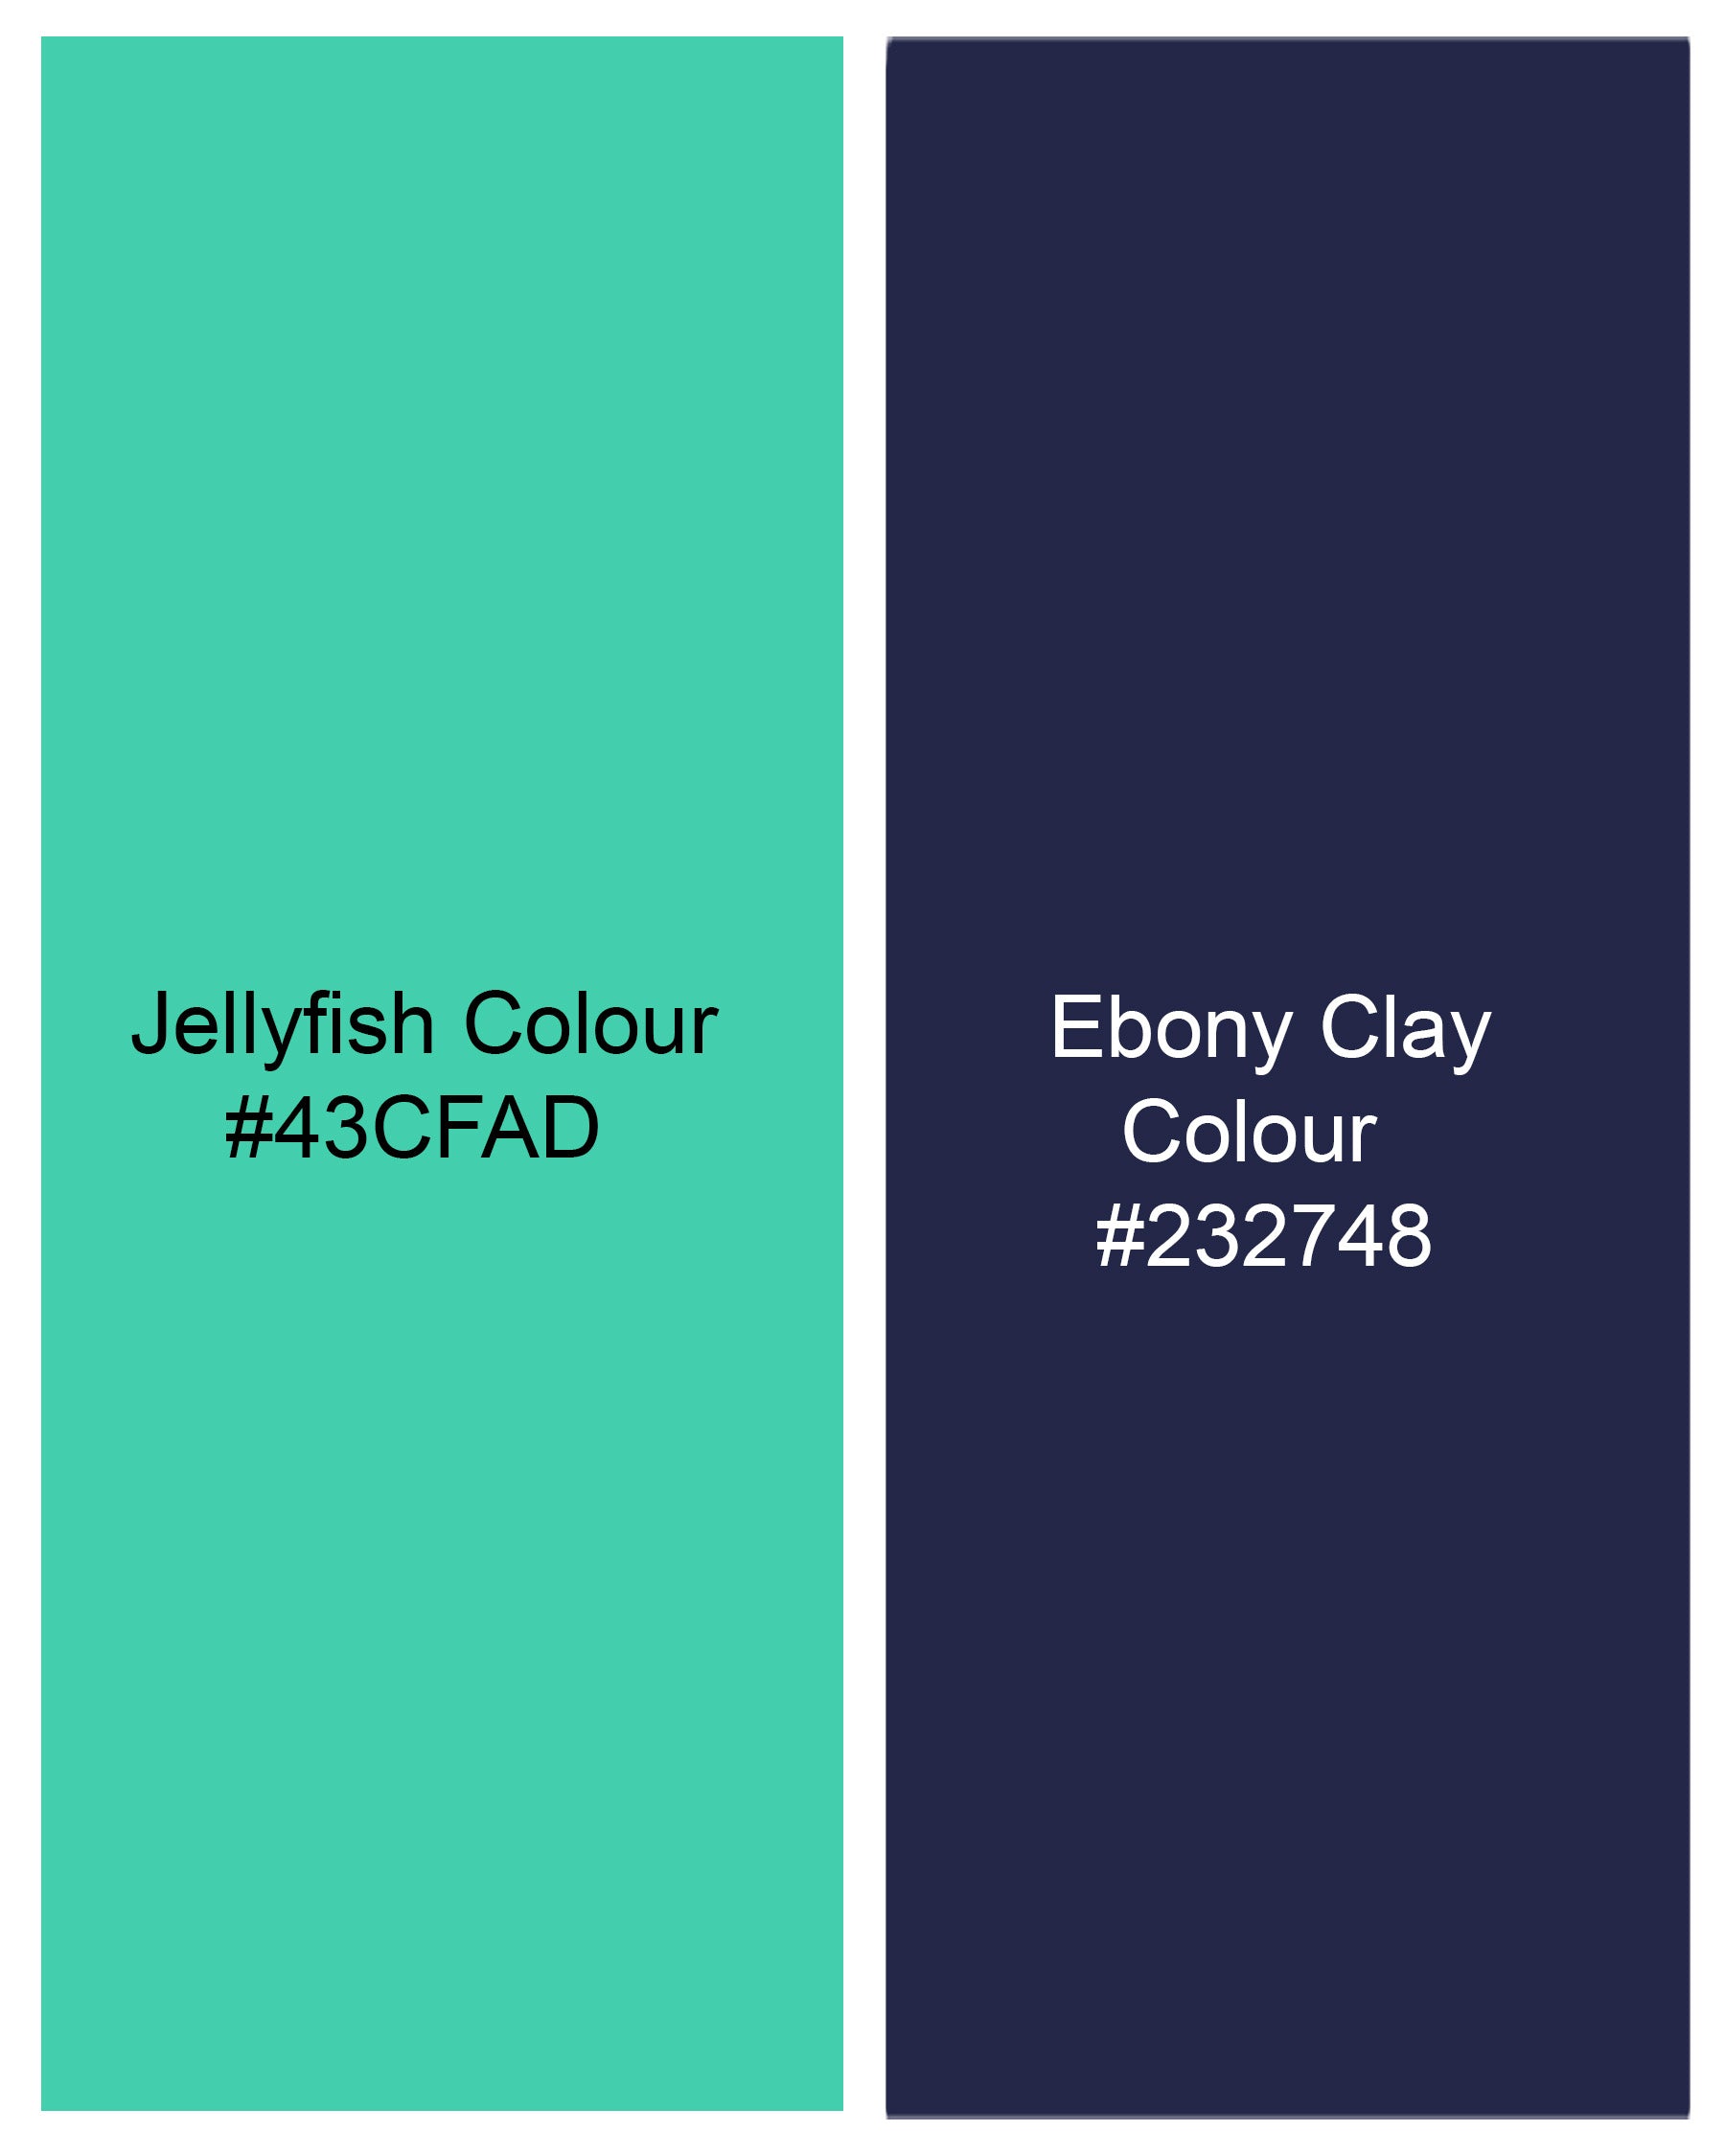 Jellyfish Green with Alien Printed Royal Oxford Designer Shirt 8295-P131 -38,8295-P131 -H-38,8295-P131 -39,8295-P131 -H-39,8295-P131 -40,8295-P131 -H-40,8295-P131 -42,8295-P131 -H-42,8295-P131 -44,8295-P131 -H-44,8295-P131 -46,8295-P131 -H-46,8295-P131 -48,8295-P131 -H-48,8295-P131 -50,8295-P131 -H-50,8295-P131 -52,8295-P131 -H-52